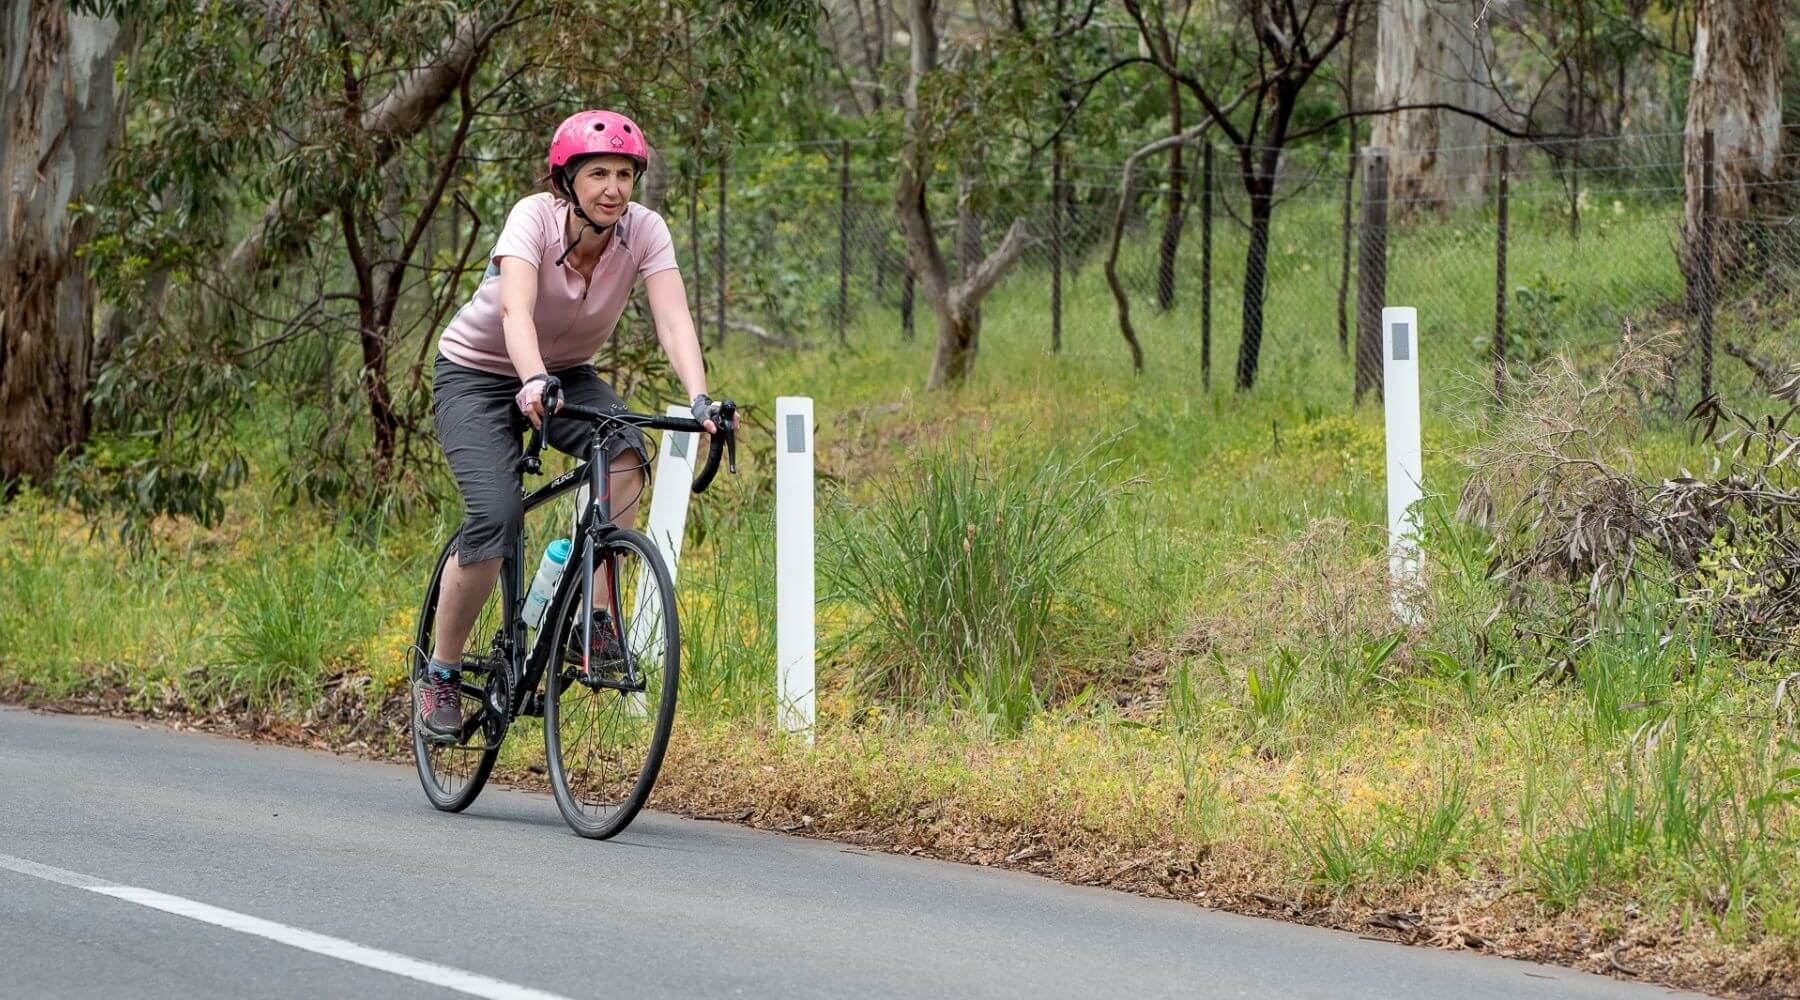 Jo riding bike on road wearing grey helmet friendly sports headband under bright pink helmet